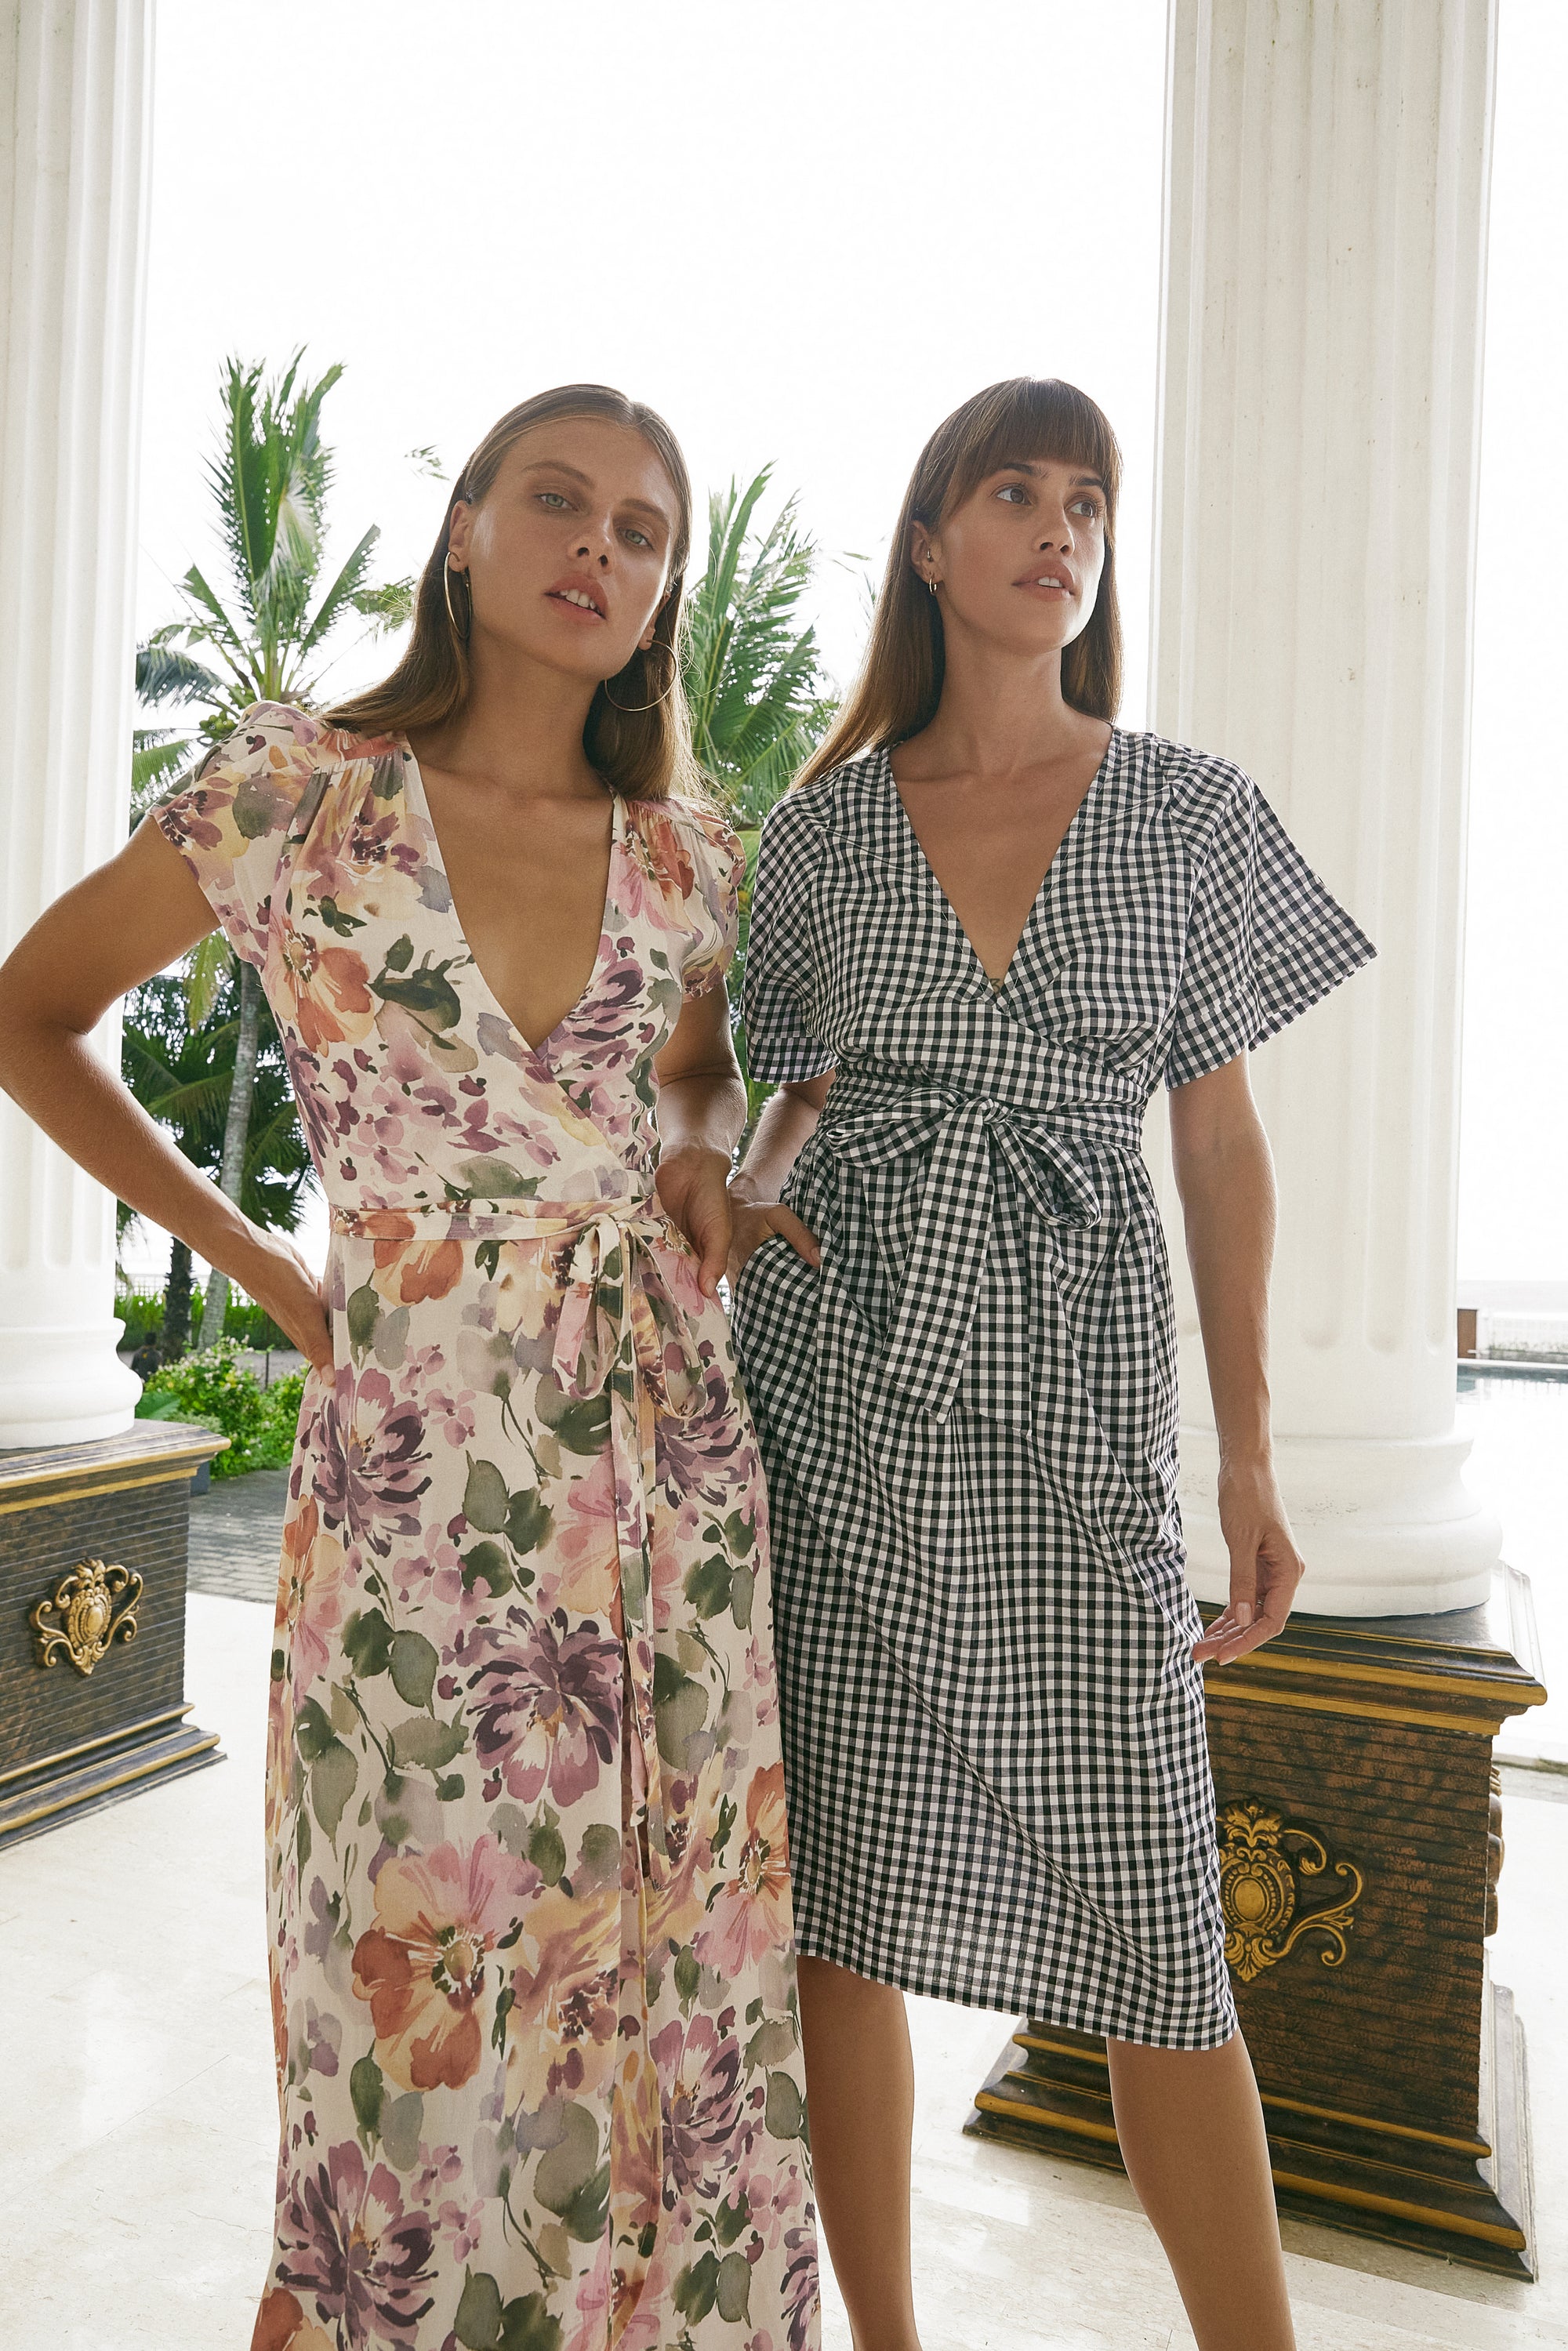 Two women modelling wearing printed dresses